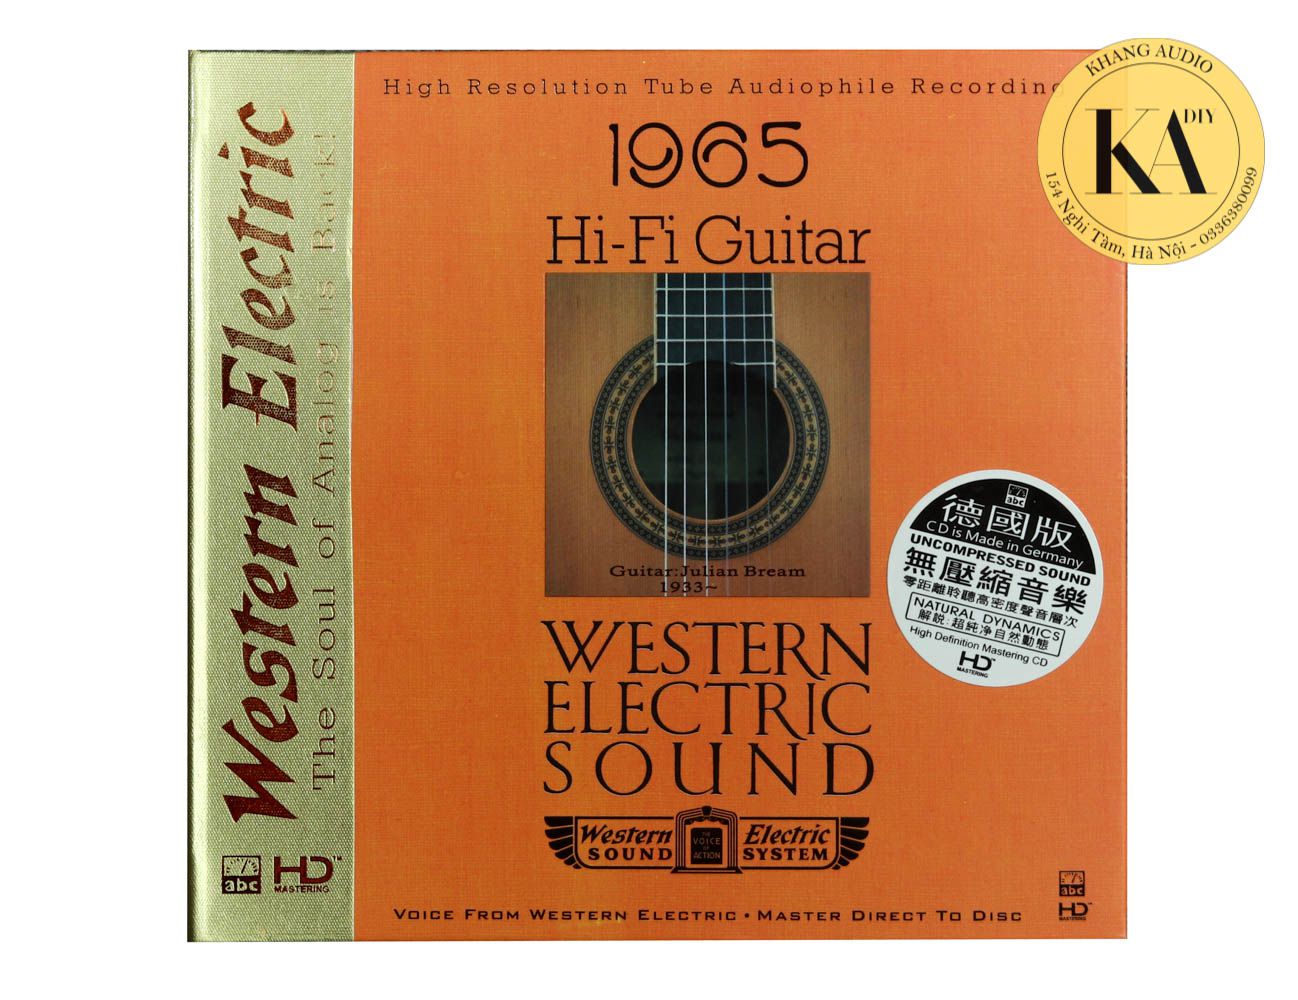 Western Electric Sound - 1965 - Hi Fi Guitar Khang Audio 0336380099